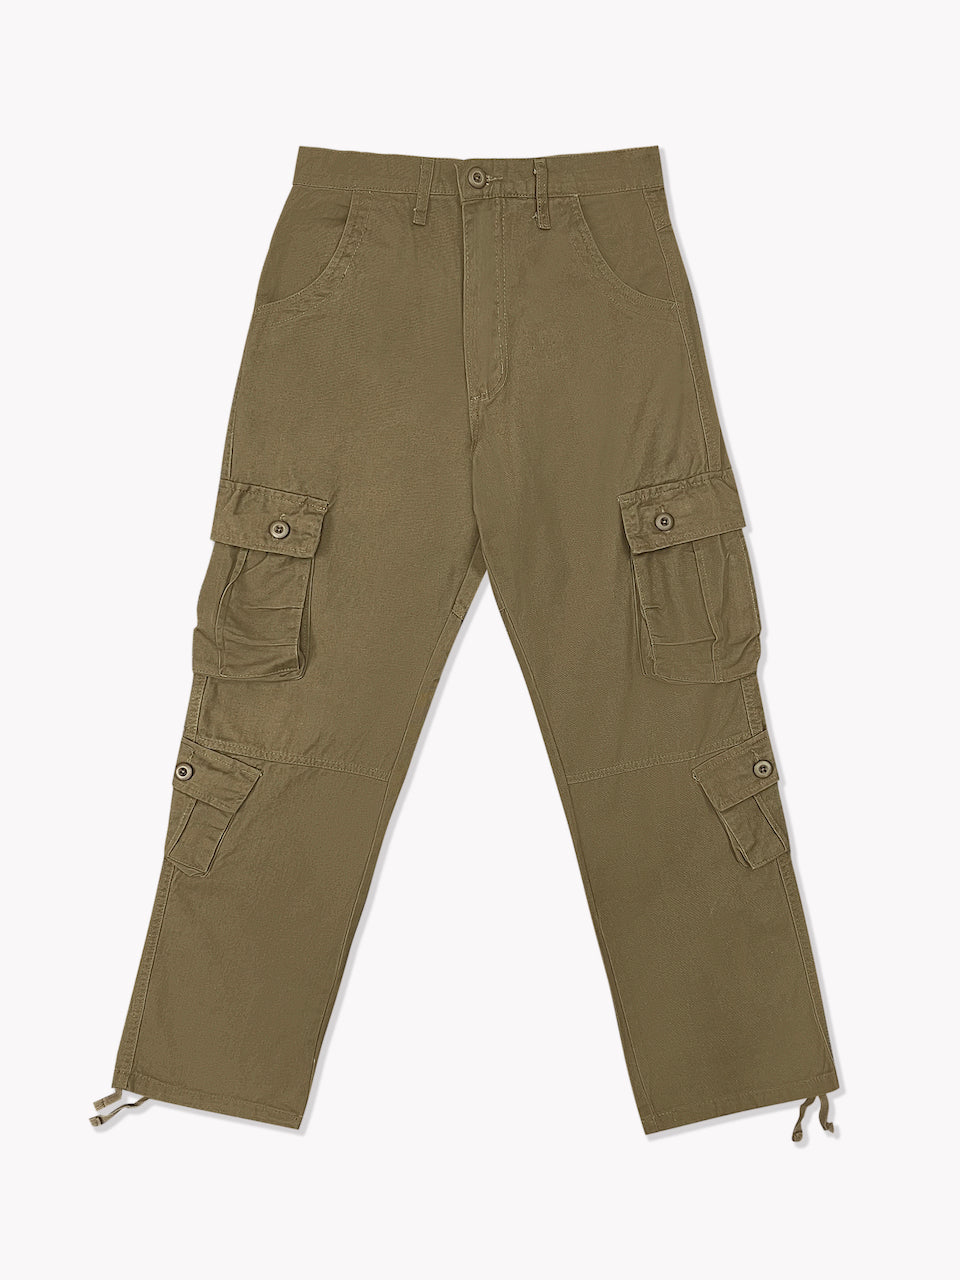 8 Pocket Cargo Pants-Khaki | Brandon Thorne | Reviews on Judge.me